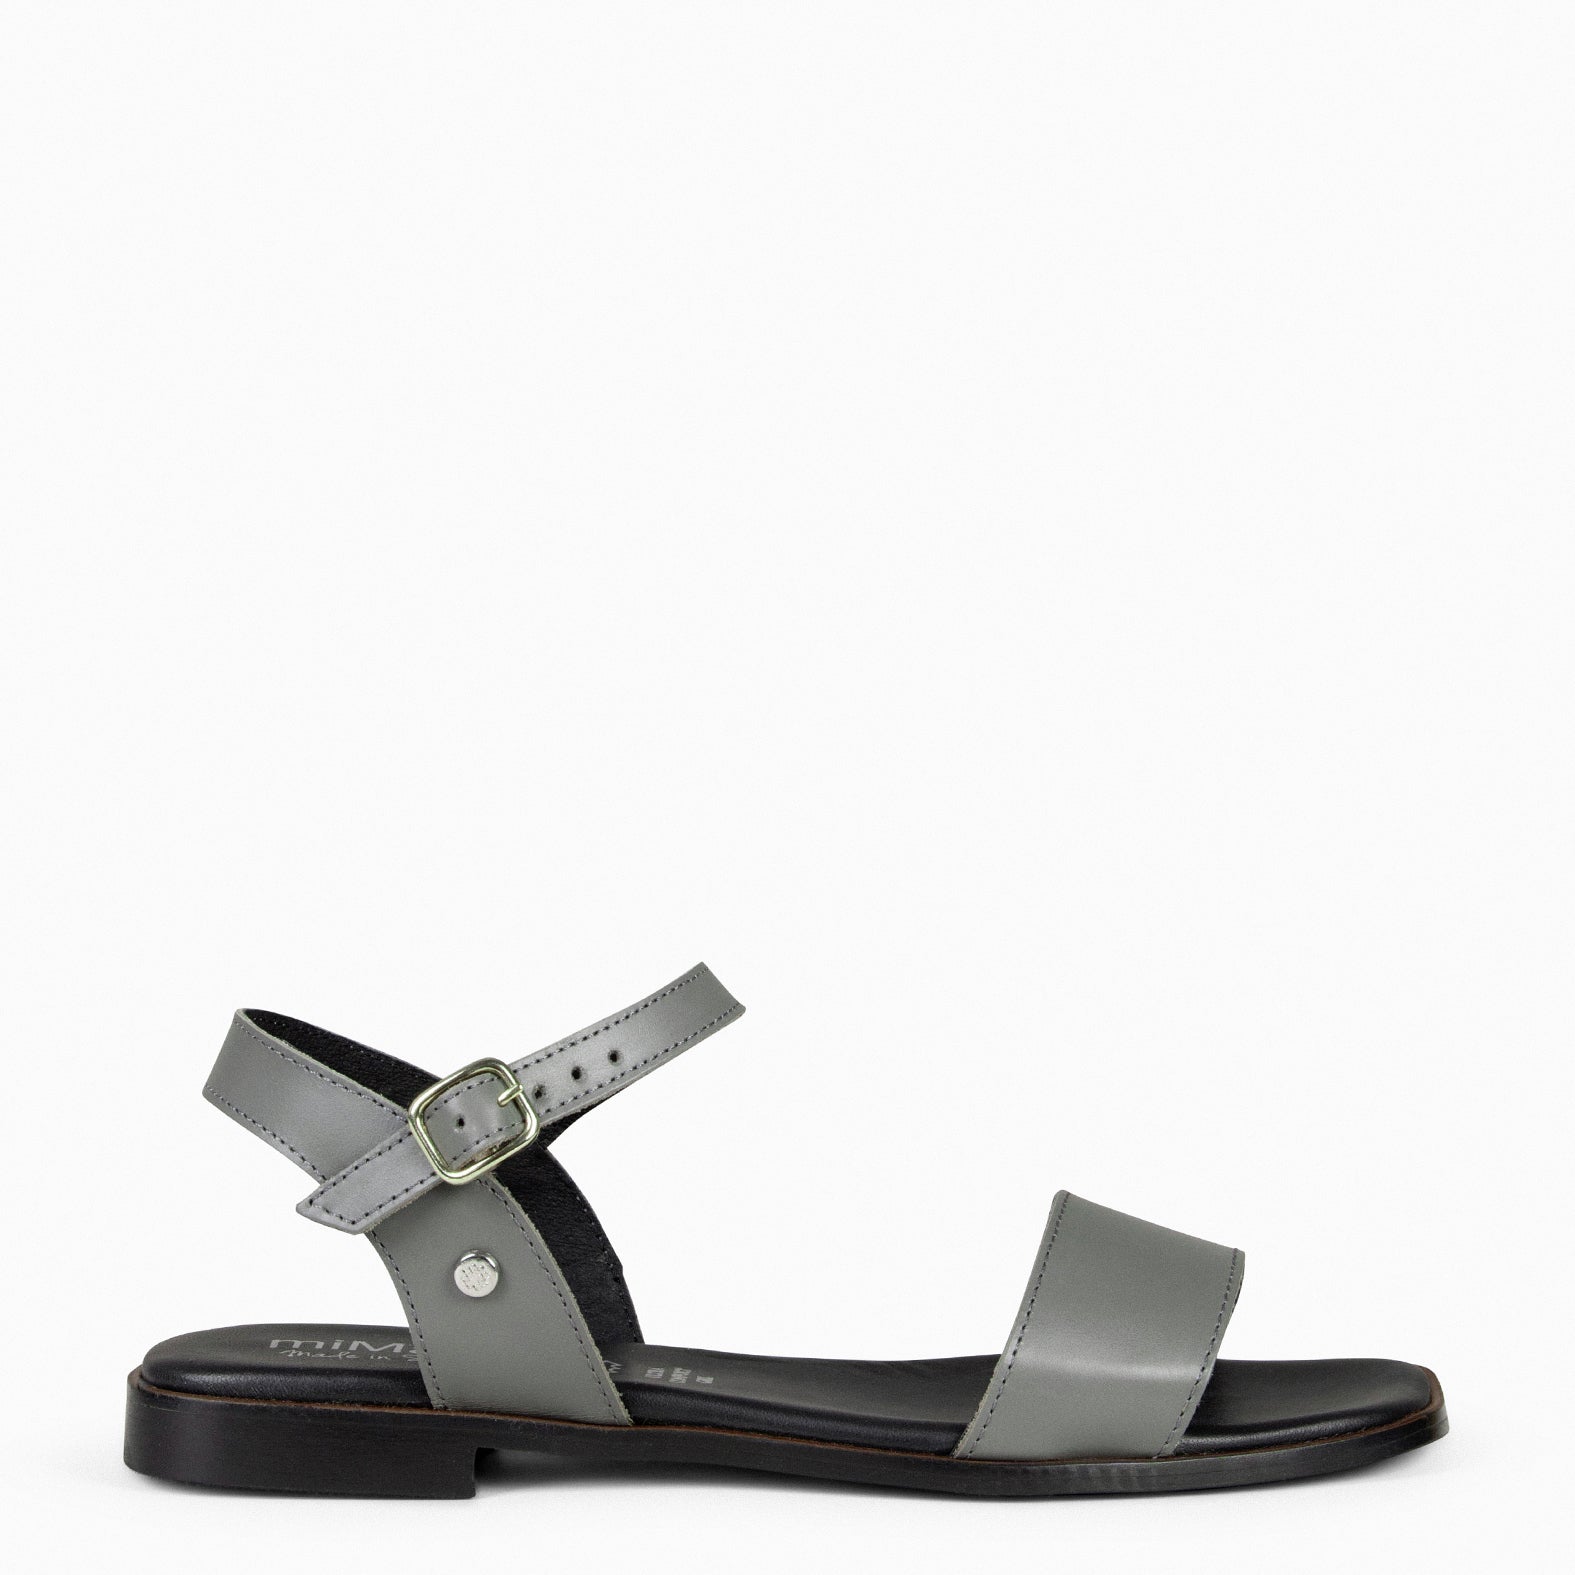 SANTORINI - SILVER Flat Sandals